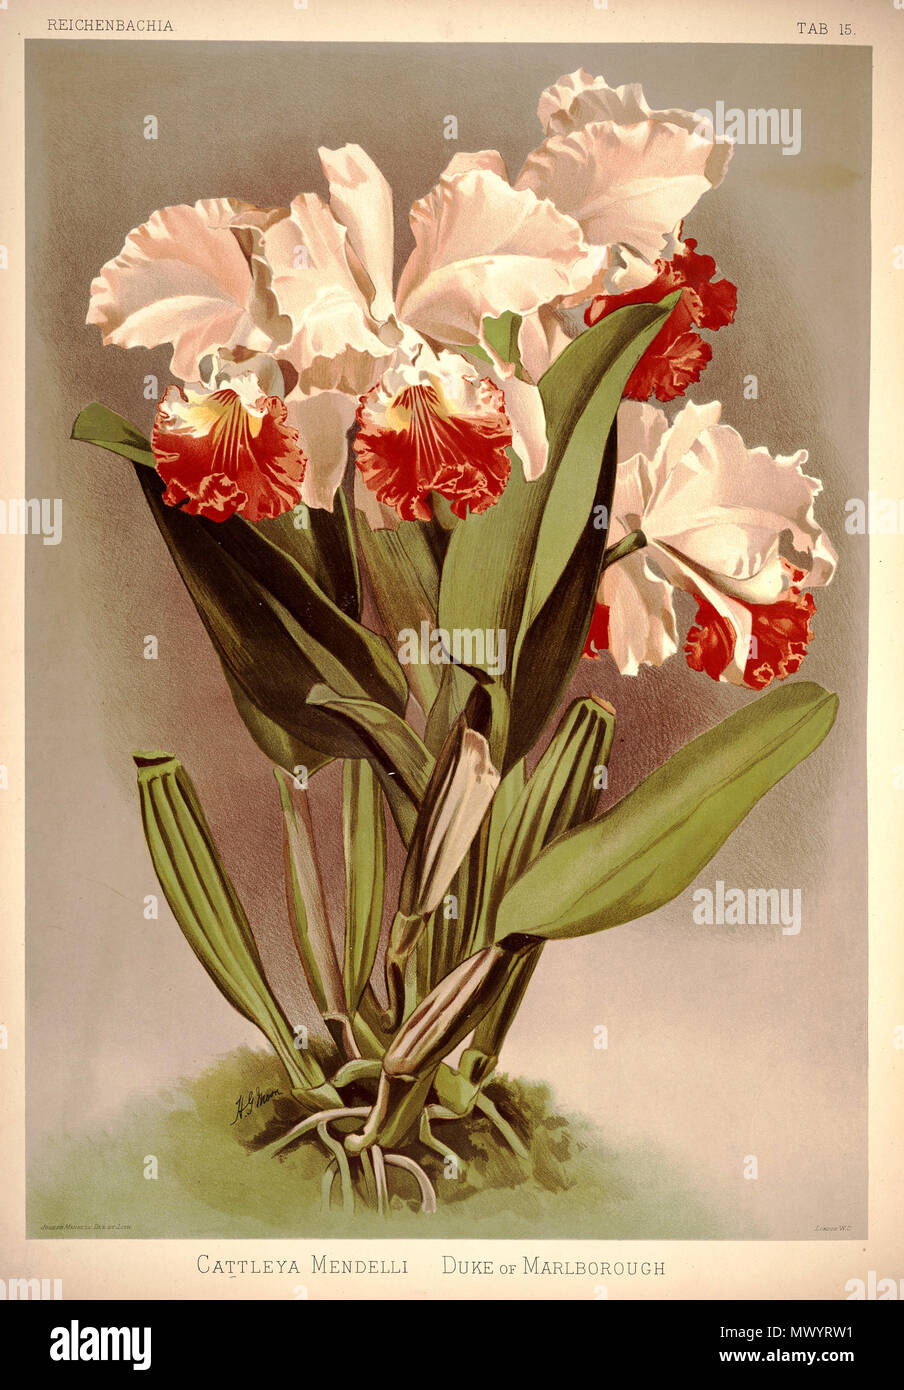 . Cattleya mendelii . between 1888 and 1894. H. Sotheran & Co., London (editor) 220 Frederick Sander - Reichenbachia I plate 15 (1888) - Cattleya mendelli Stock Photo